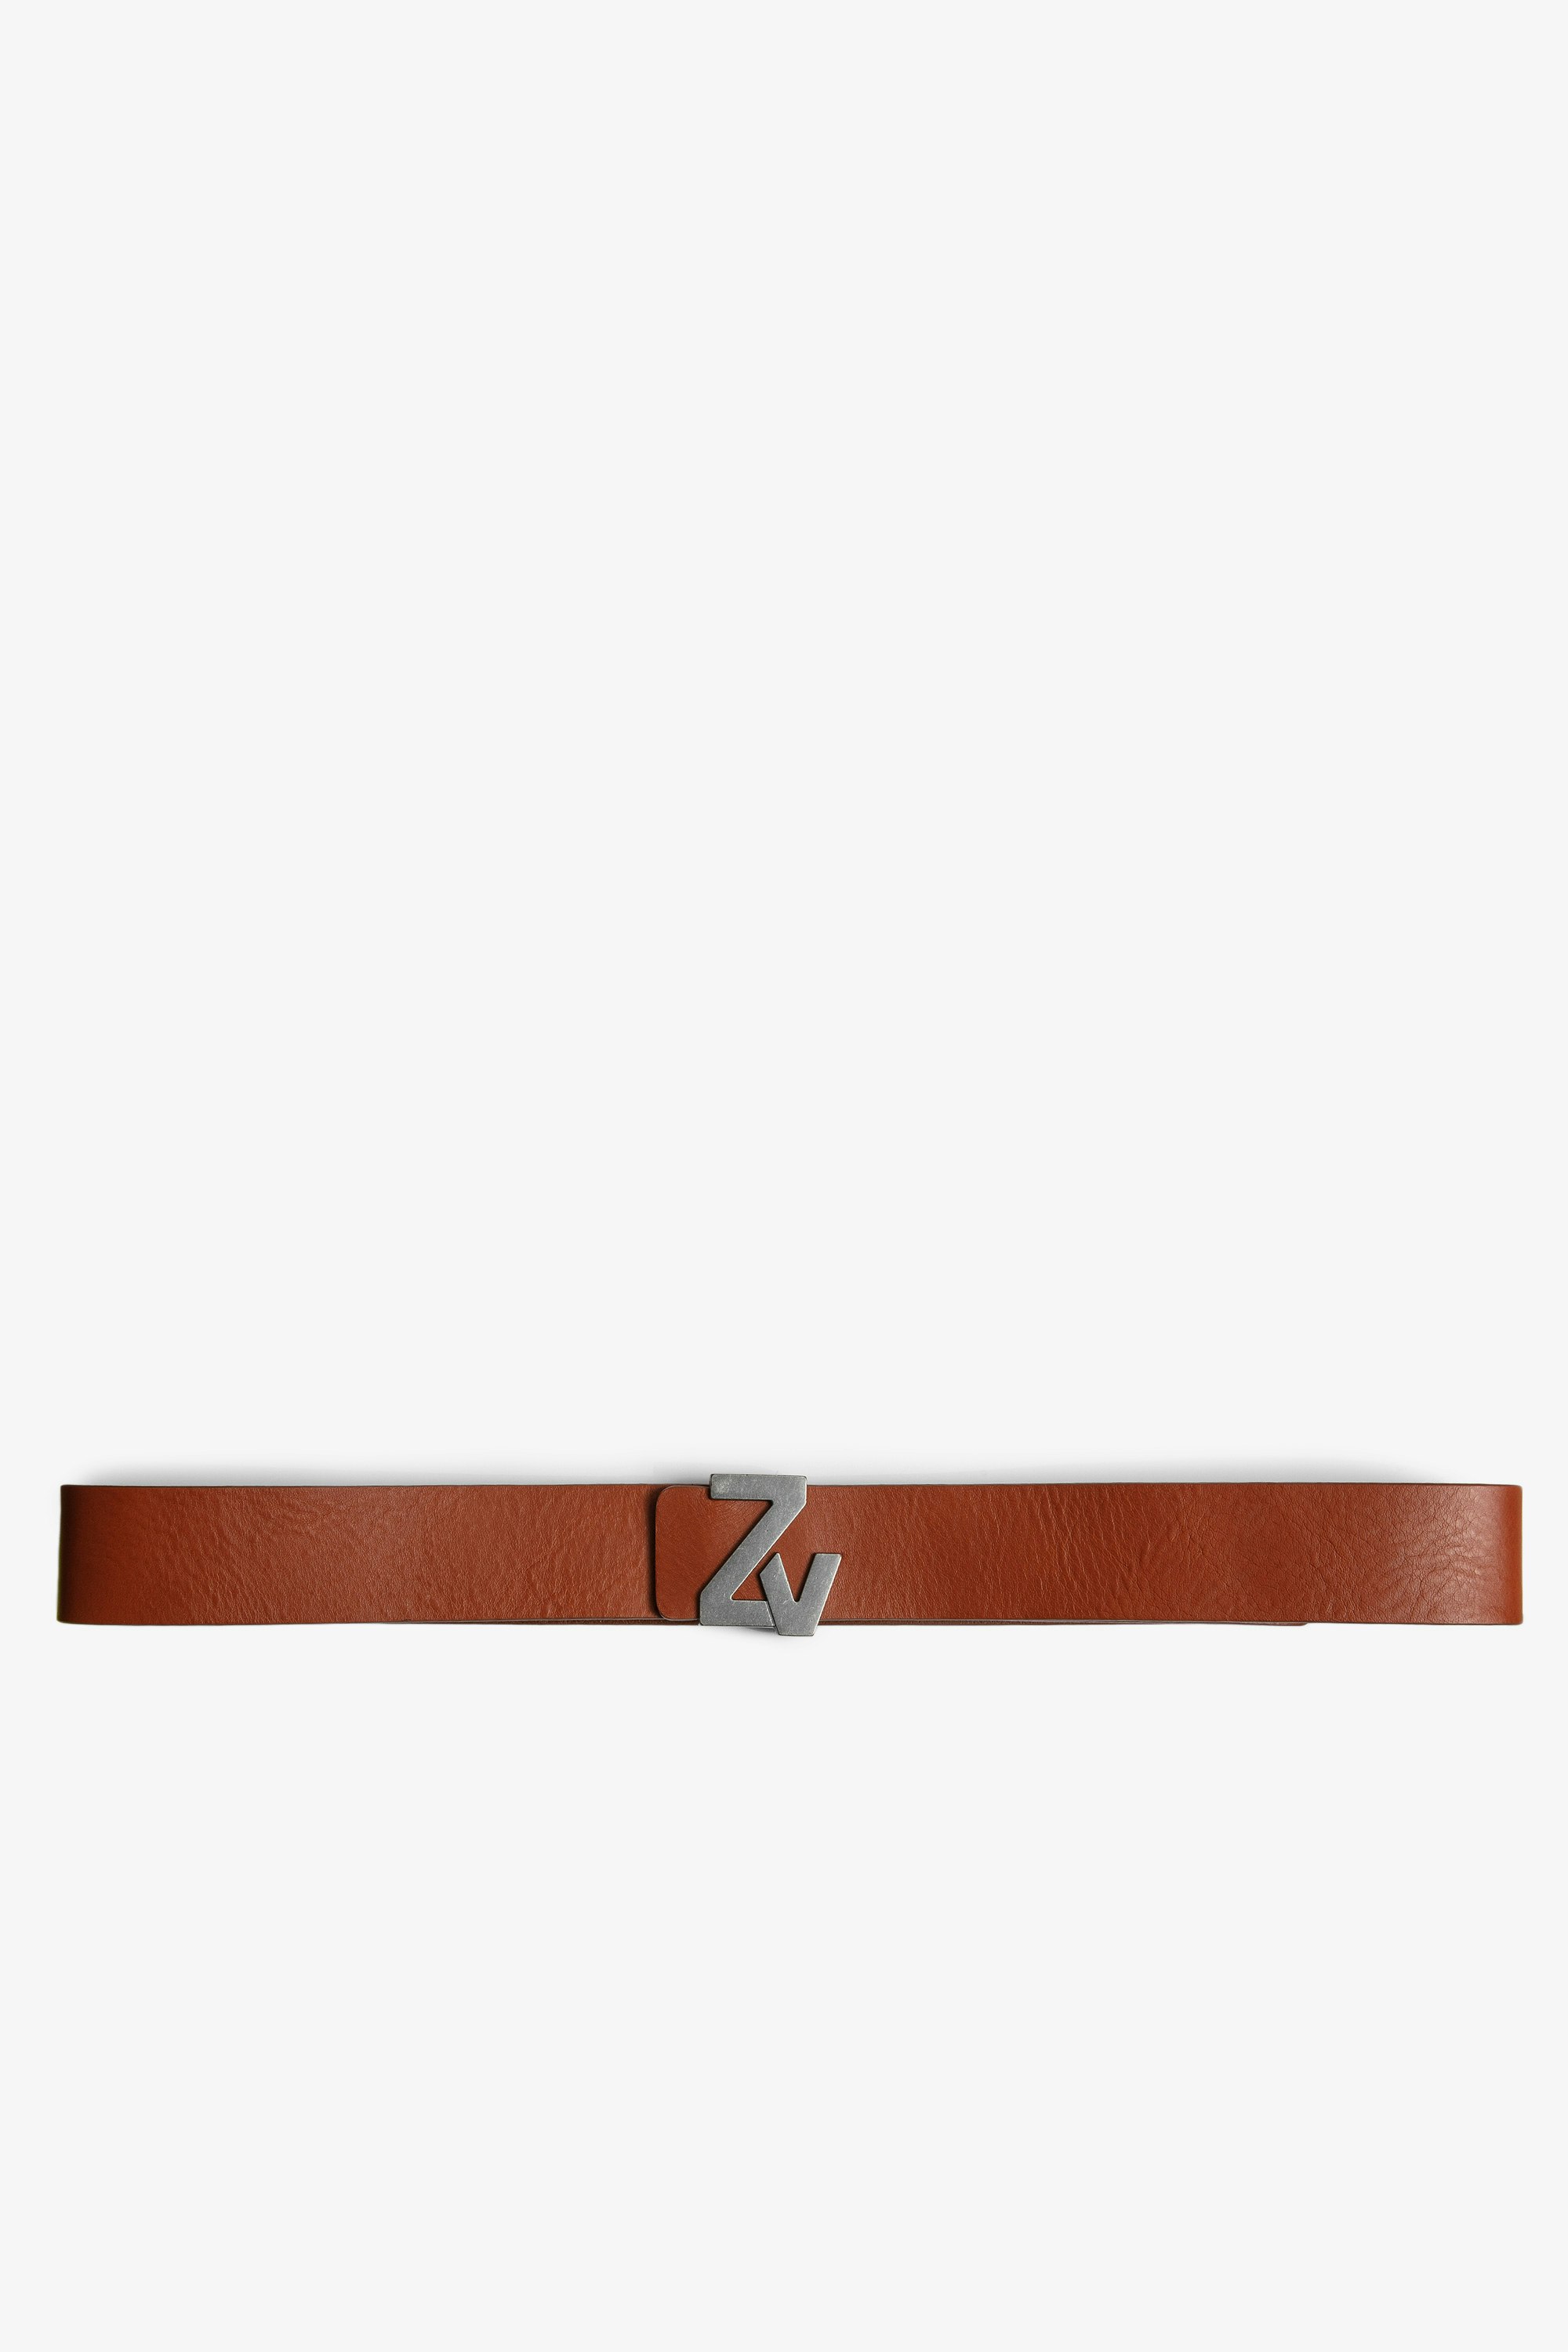 ZV Initiale La Belt Leather Men's cognac leather belt with ZV buckle